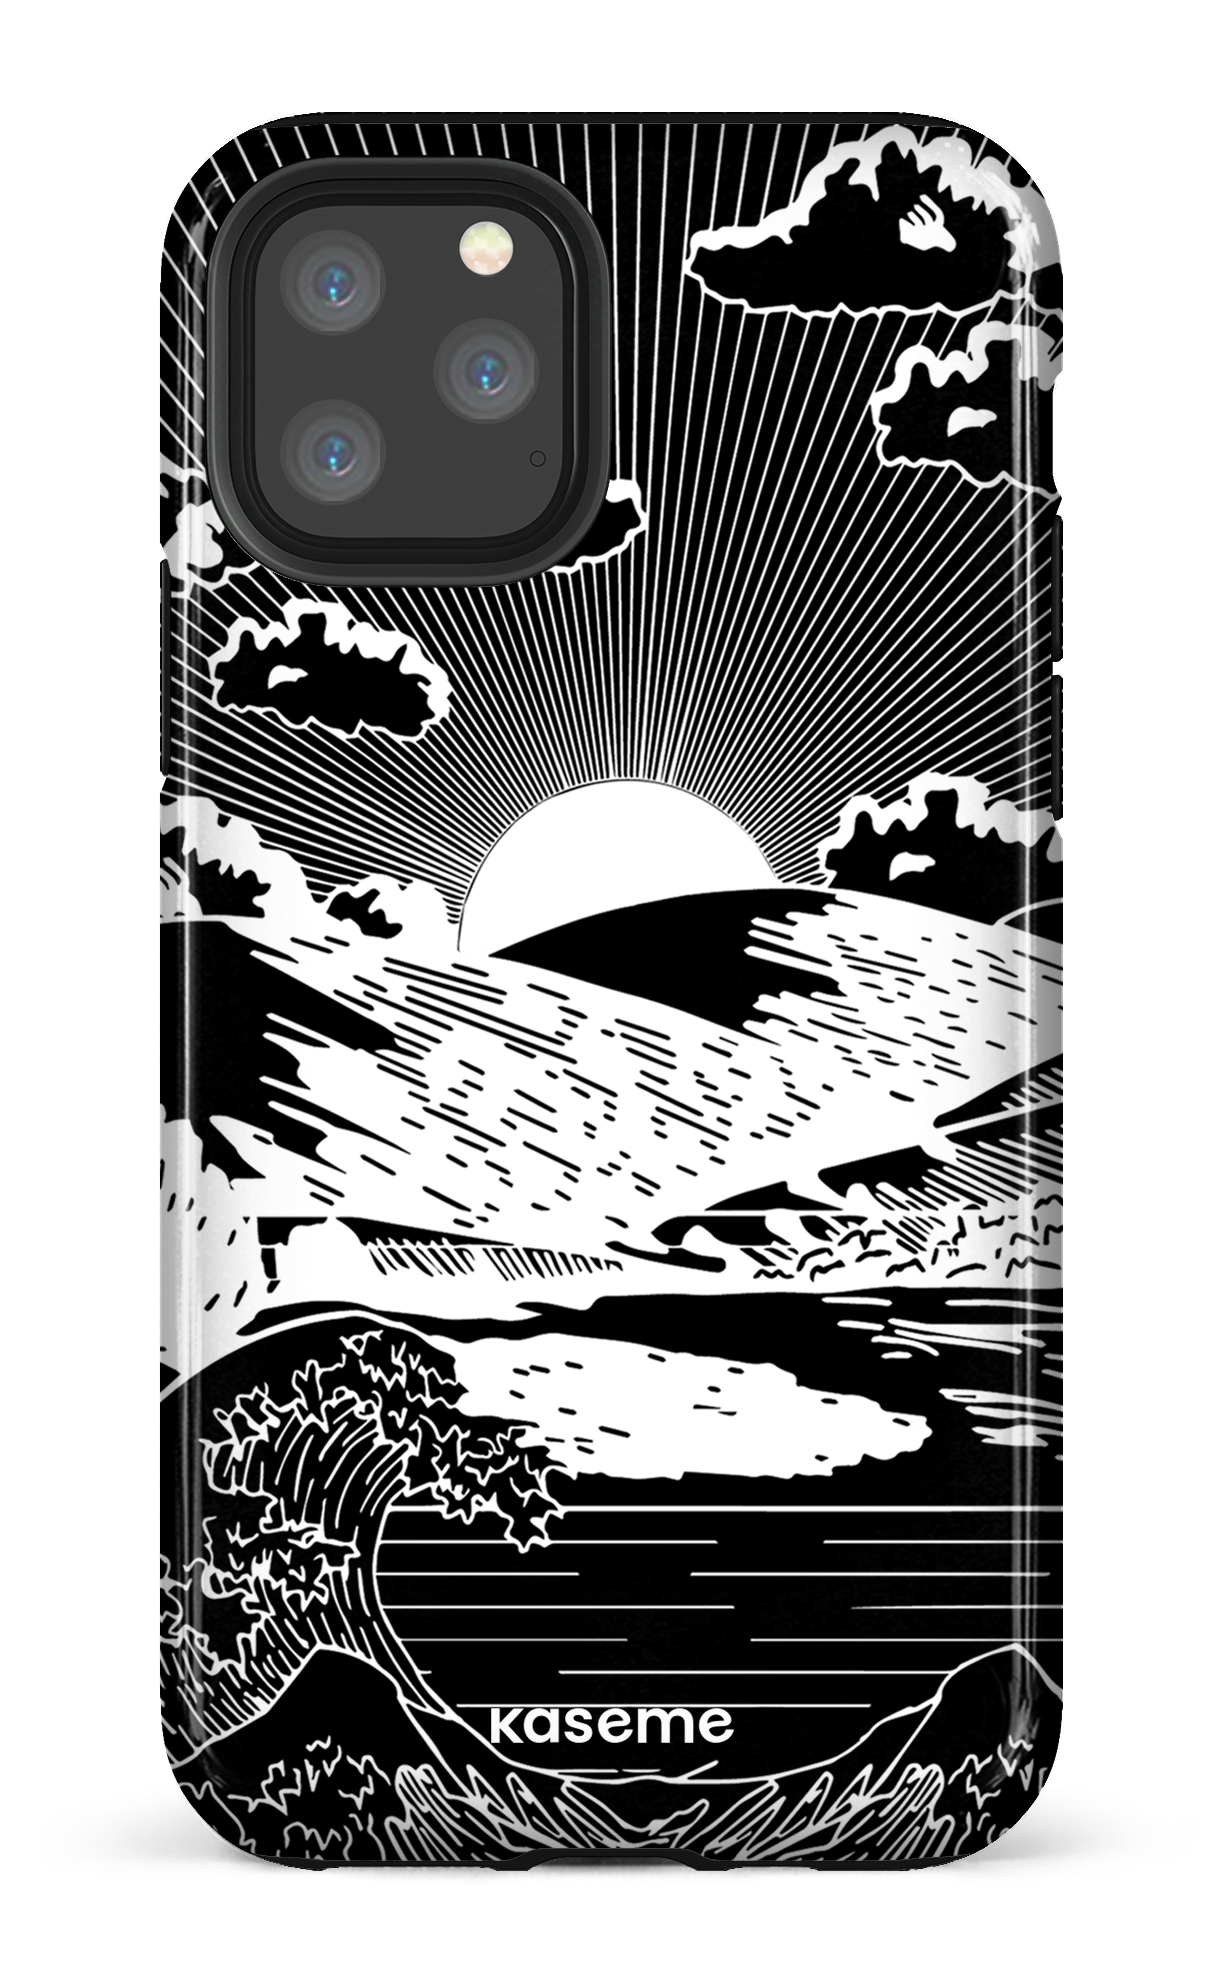 Sunbath black - iPhone 11 Pro